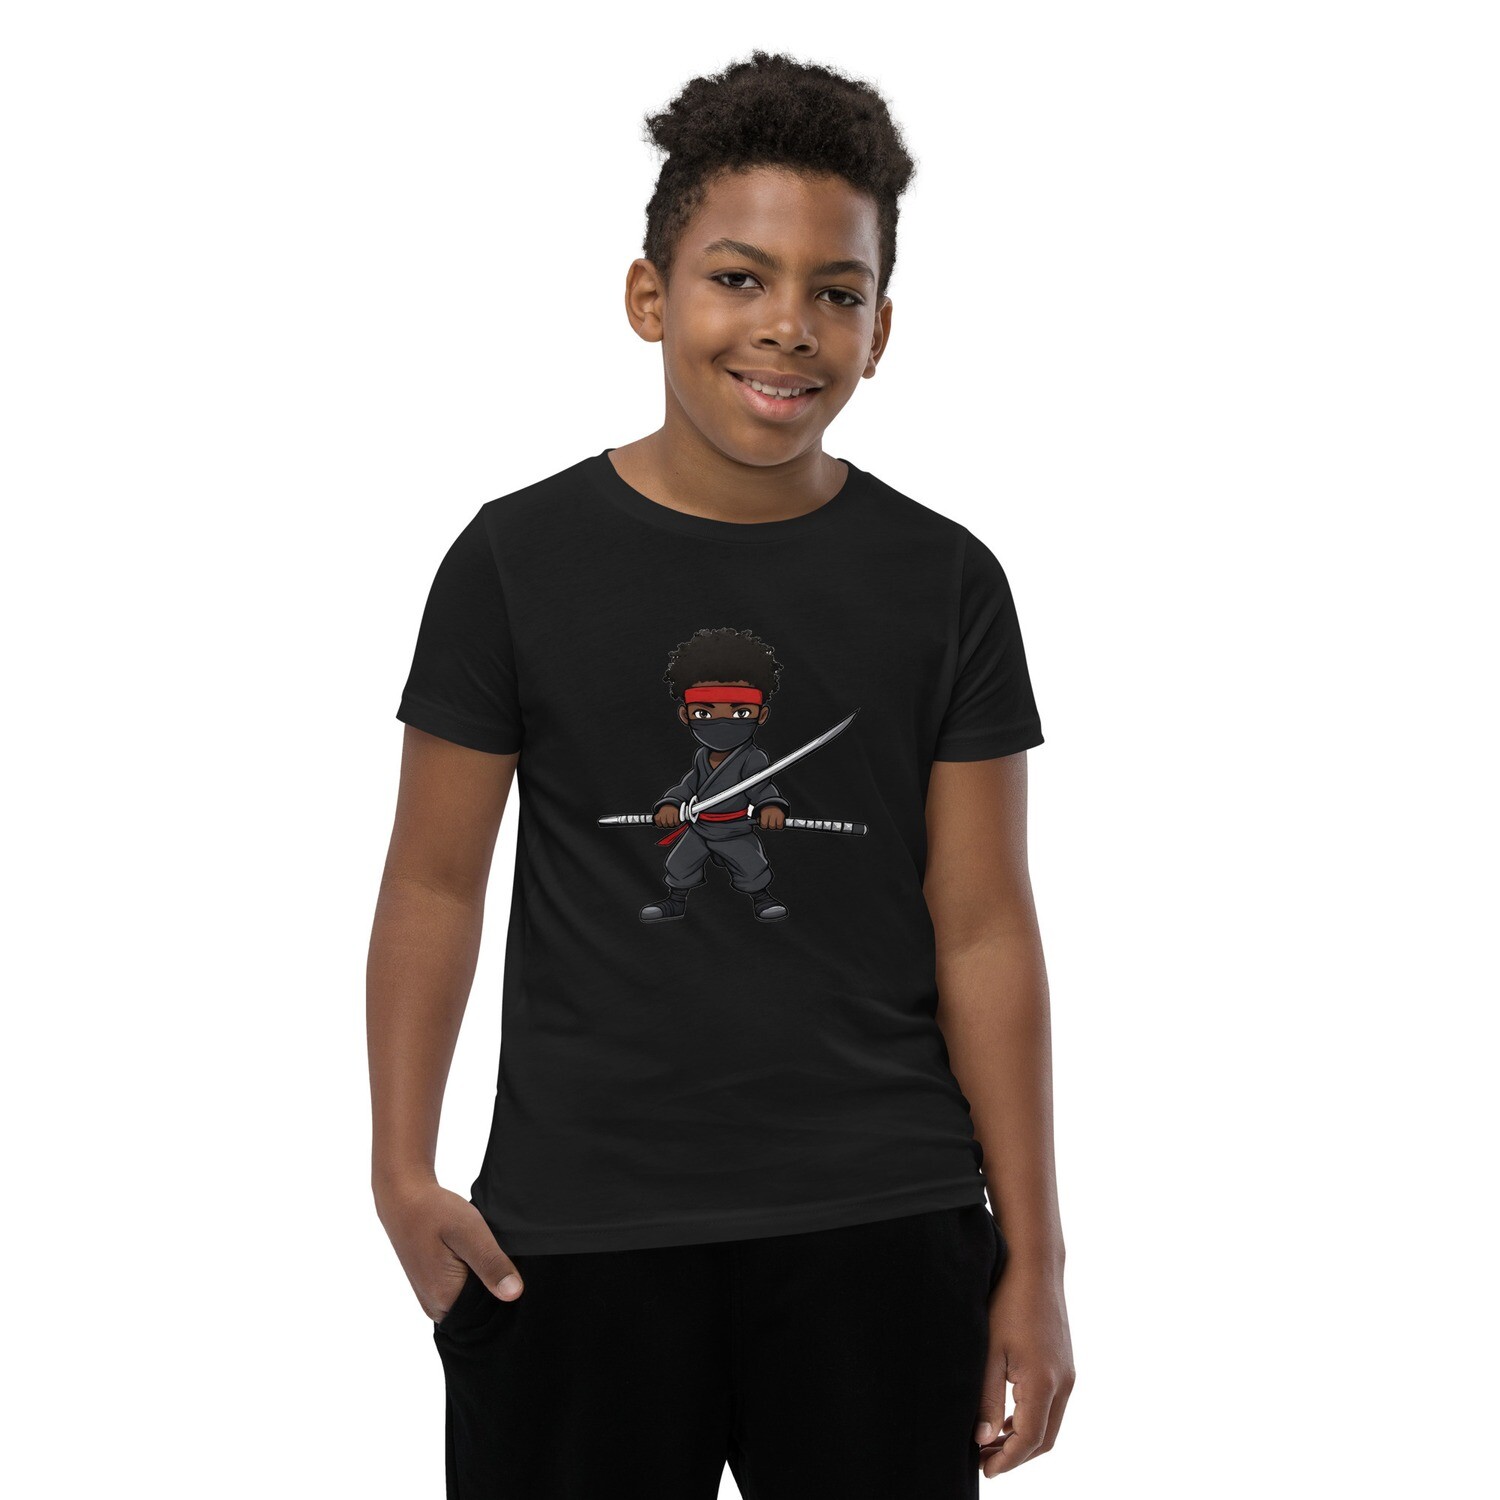 Lil Ninja Boys Youth Short Sleeve T-Shirt